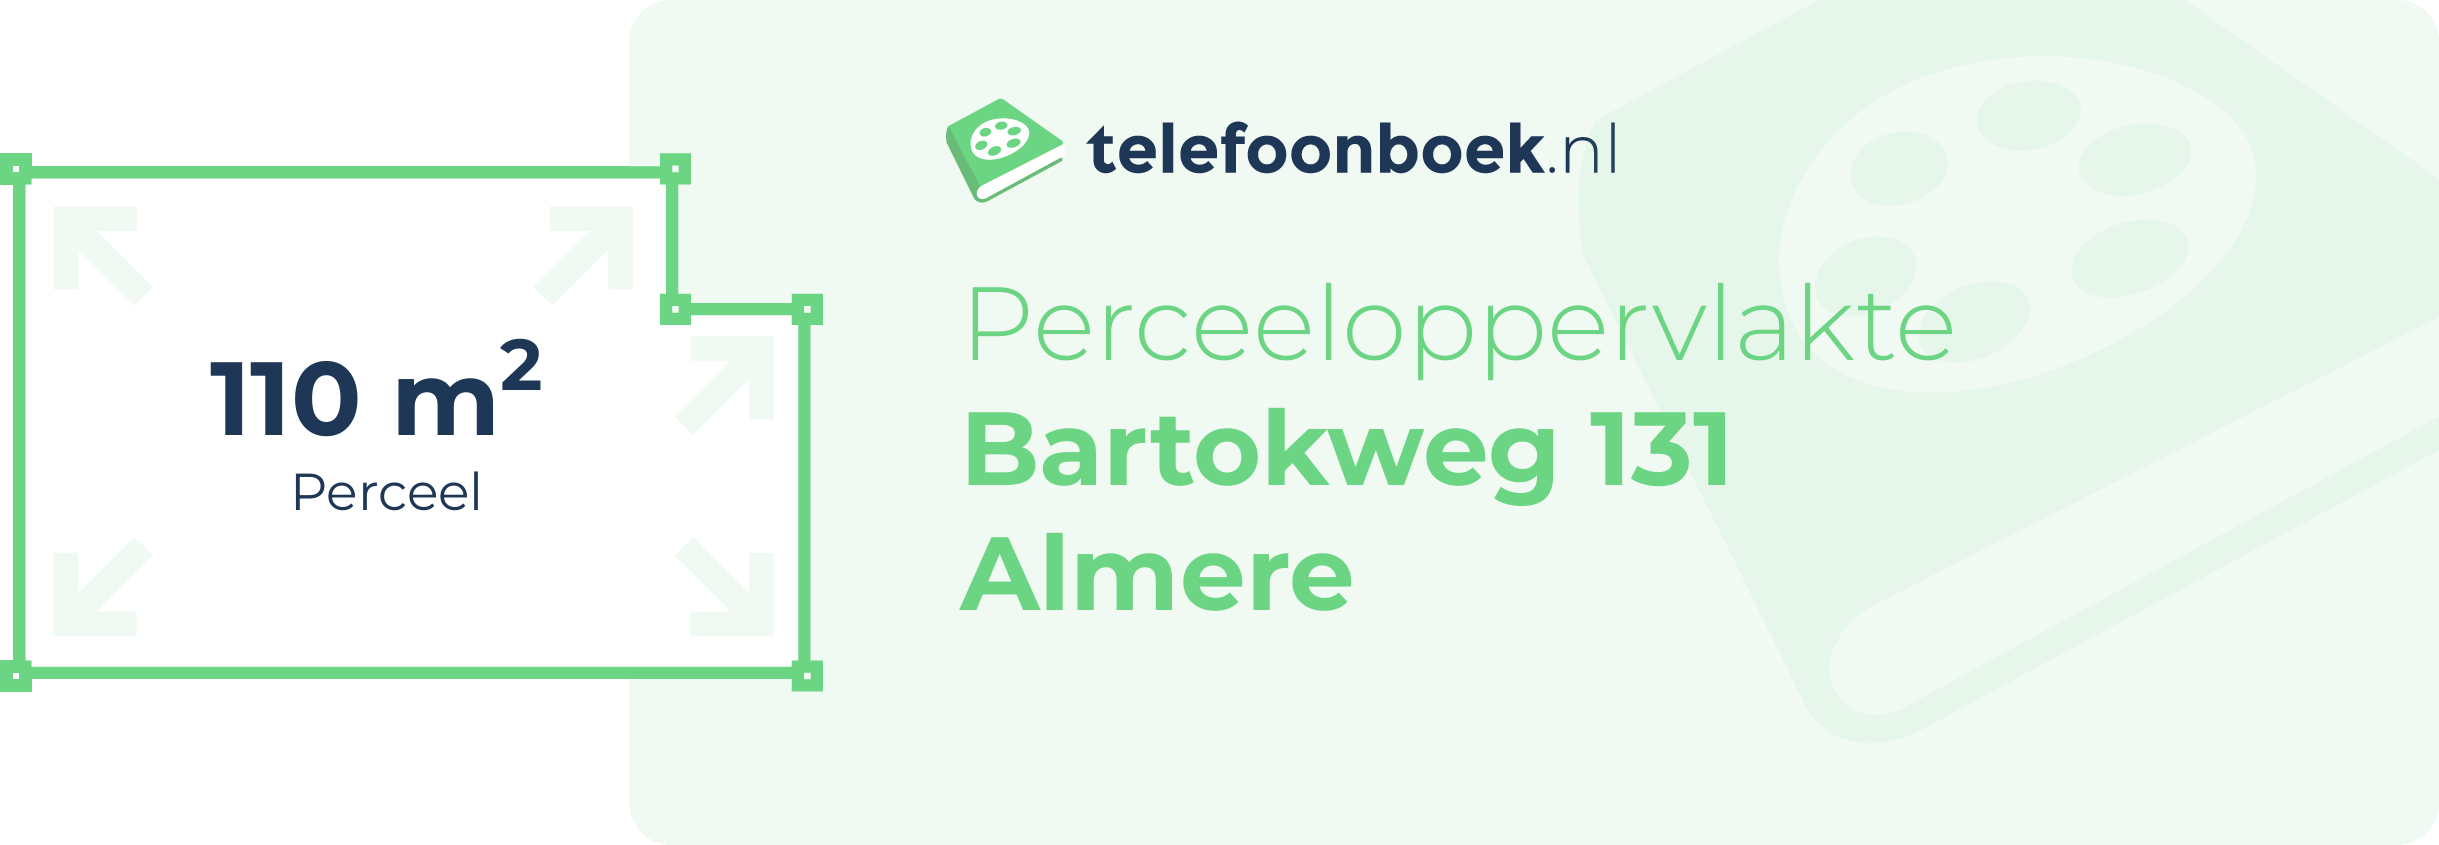 Perceeloppervlakte Bartokweg 131 Almere